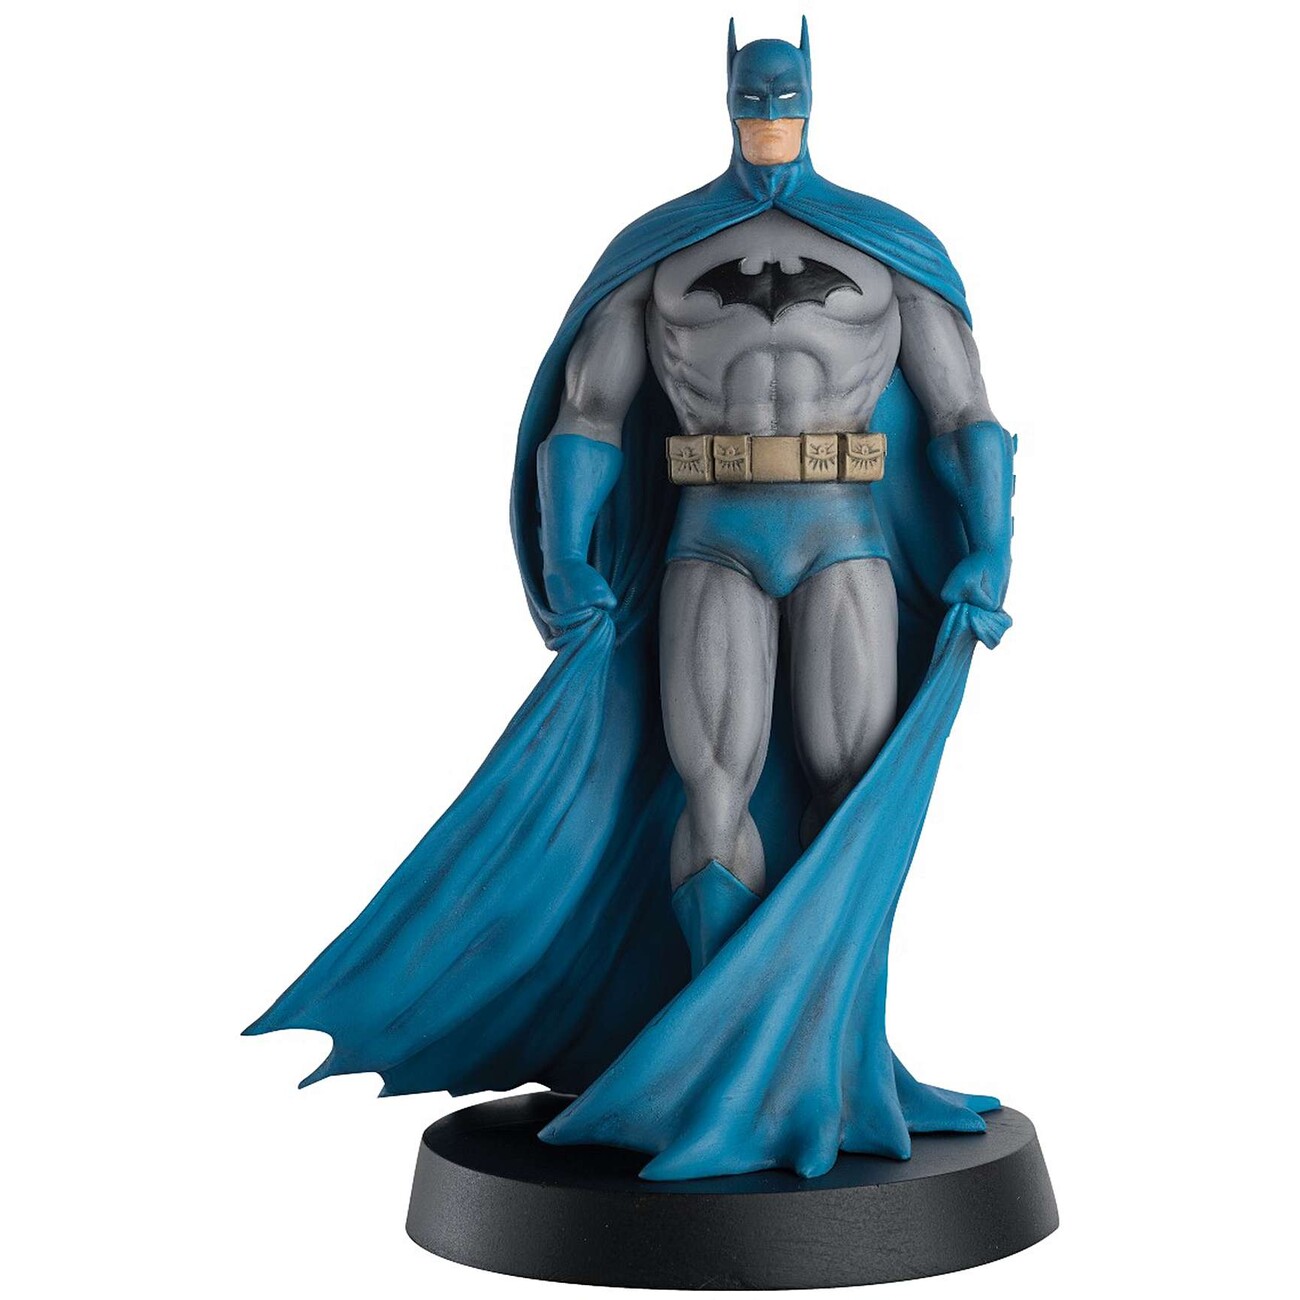 Figurine DC - Batman 2000 | Tips for original gifts